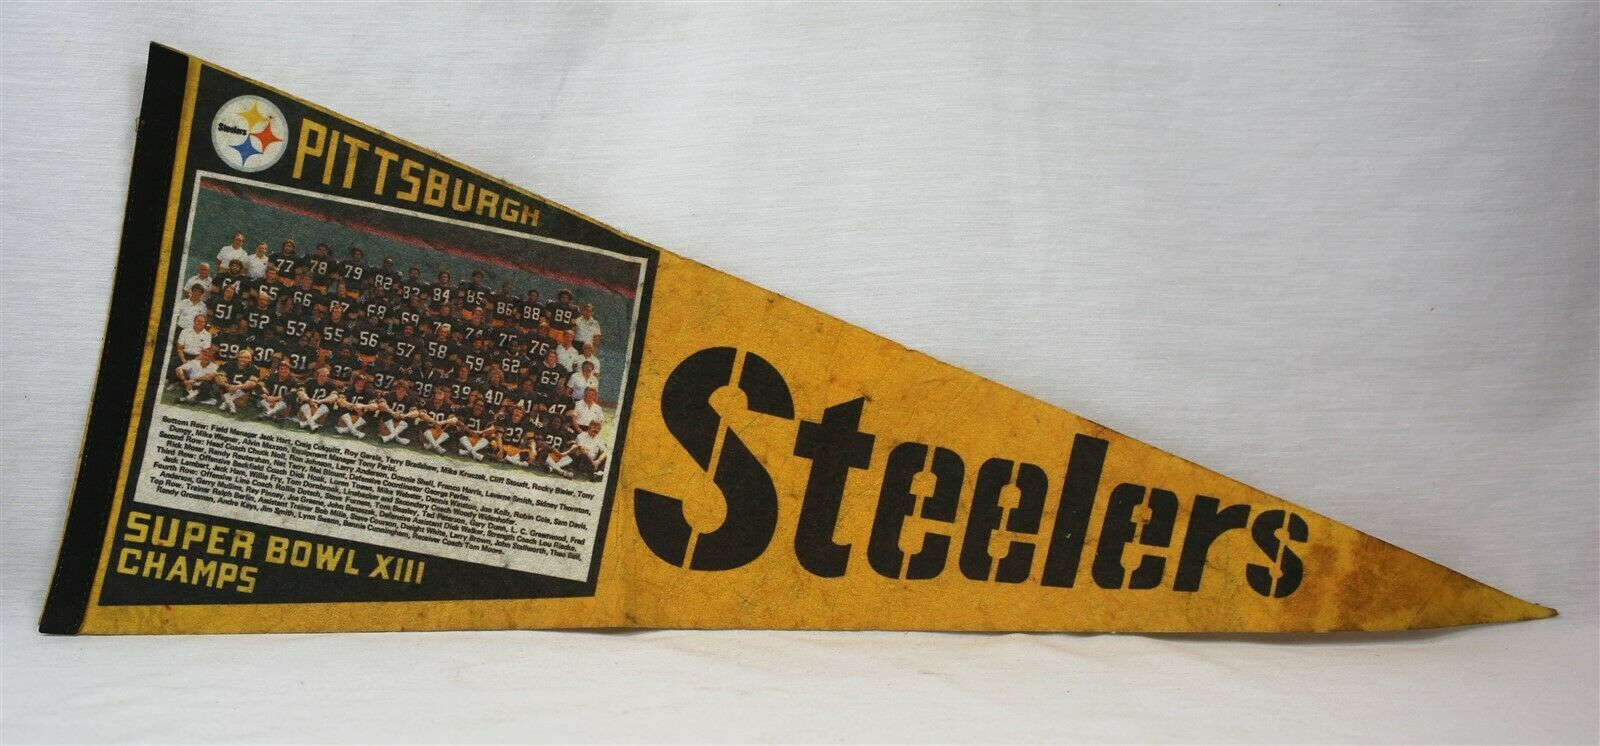  VINTAGE Pittsburgh Steelers Super Bowl XIII Team Photo Pennant - $98.99